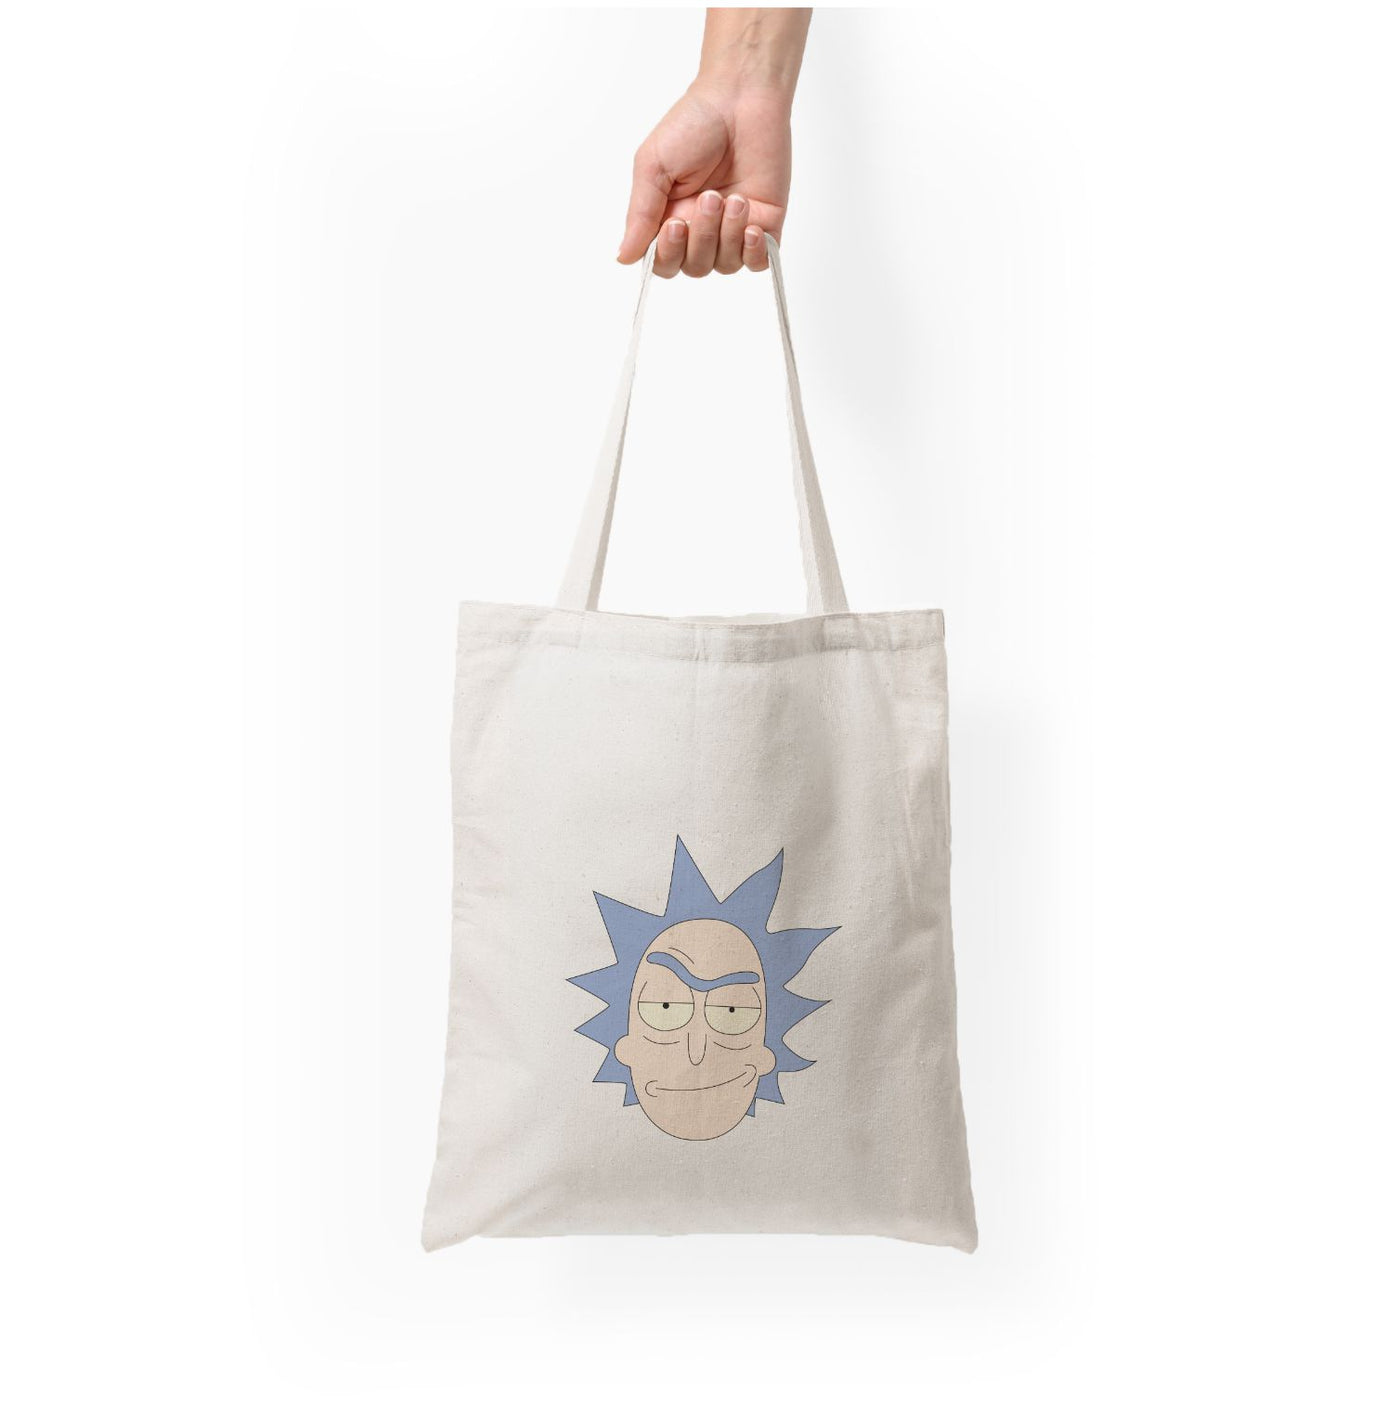 Smirk - Rick And Morty Tote Bag